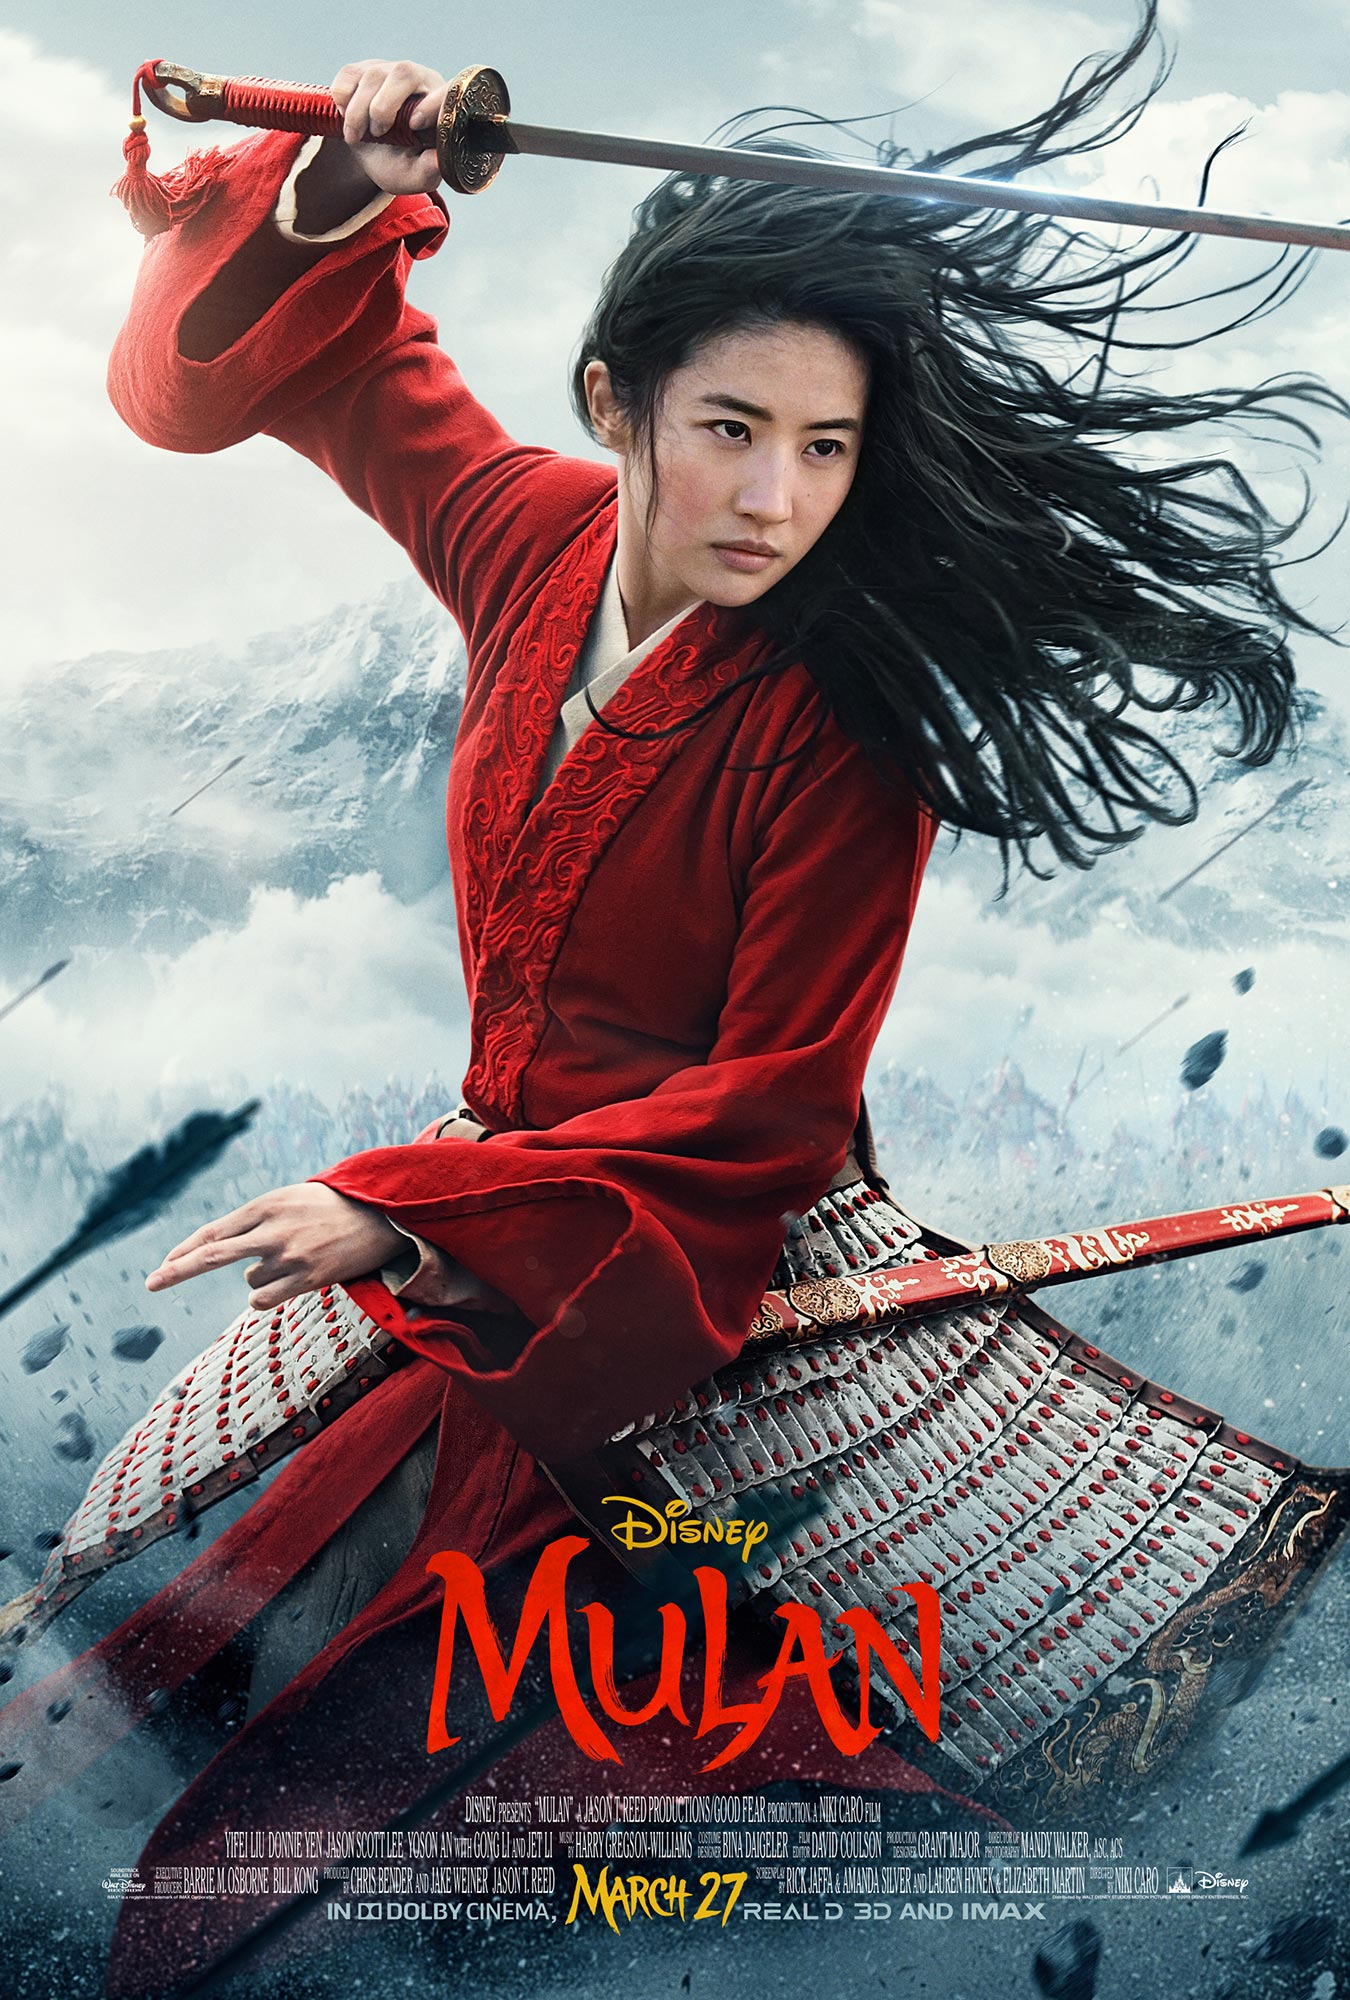 Disney's Mulan - Official Trailer